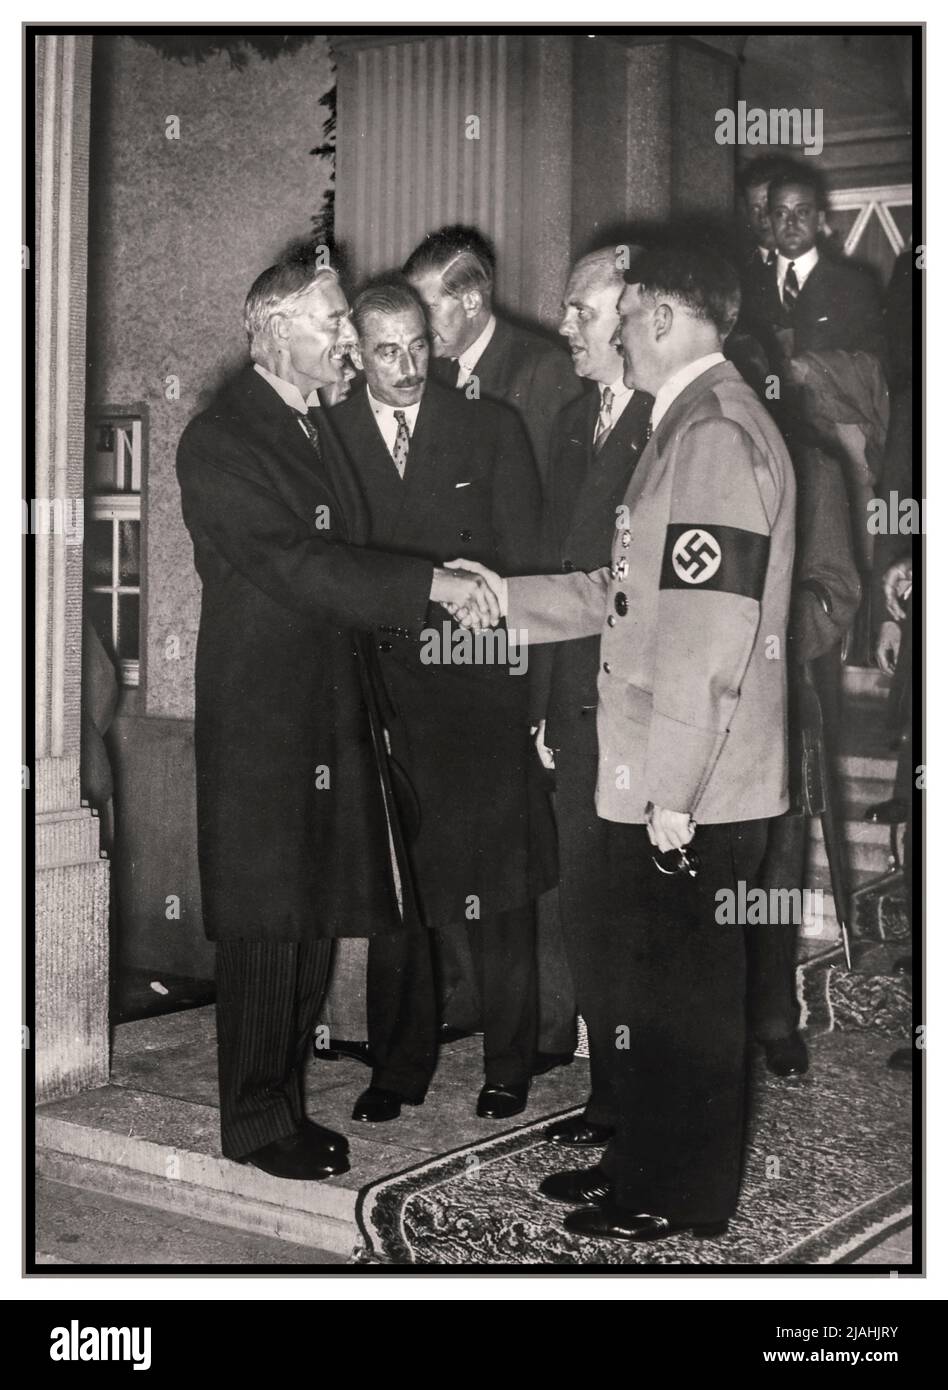 HITLER CHAMBERLAIN 1938 Propaganda de Preguerra Imagen de Neville Chamberlain Primer Ministro británico sacudiendo las manos y reuniéndose con el nazi Adolf Hitler en Berlín Alemania 30th de septiembre de 1938 Foto de stock